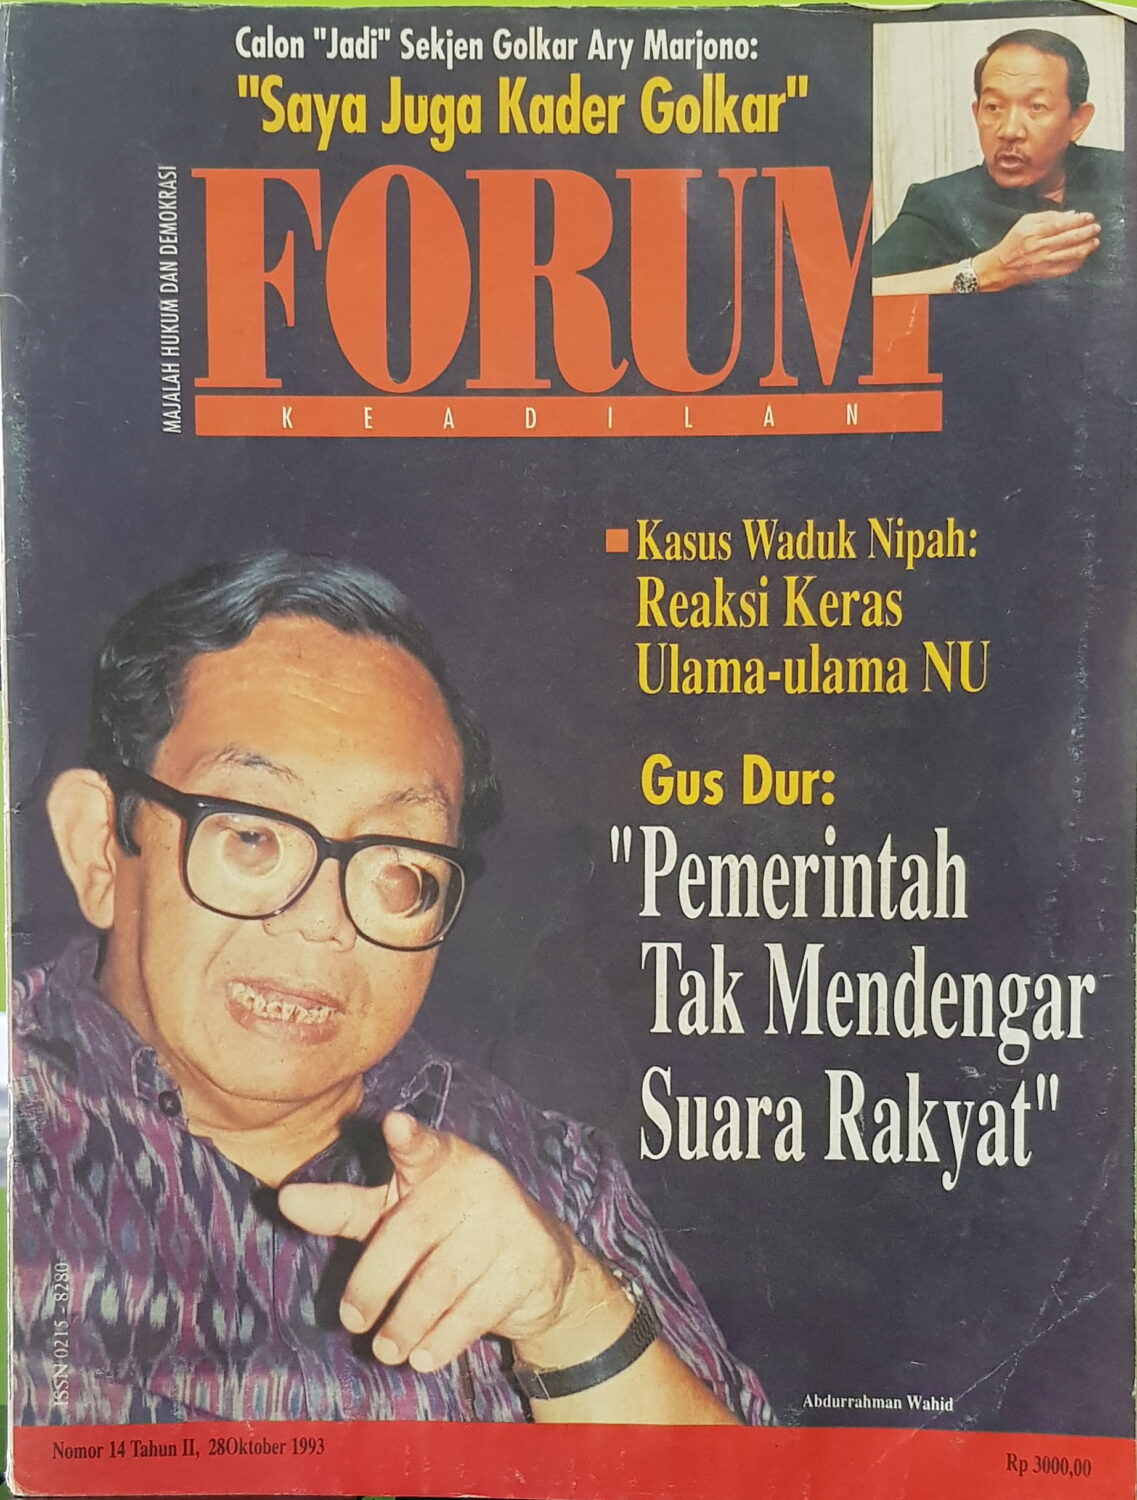 Forum Keadilan, 28 Oktober 1993